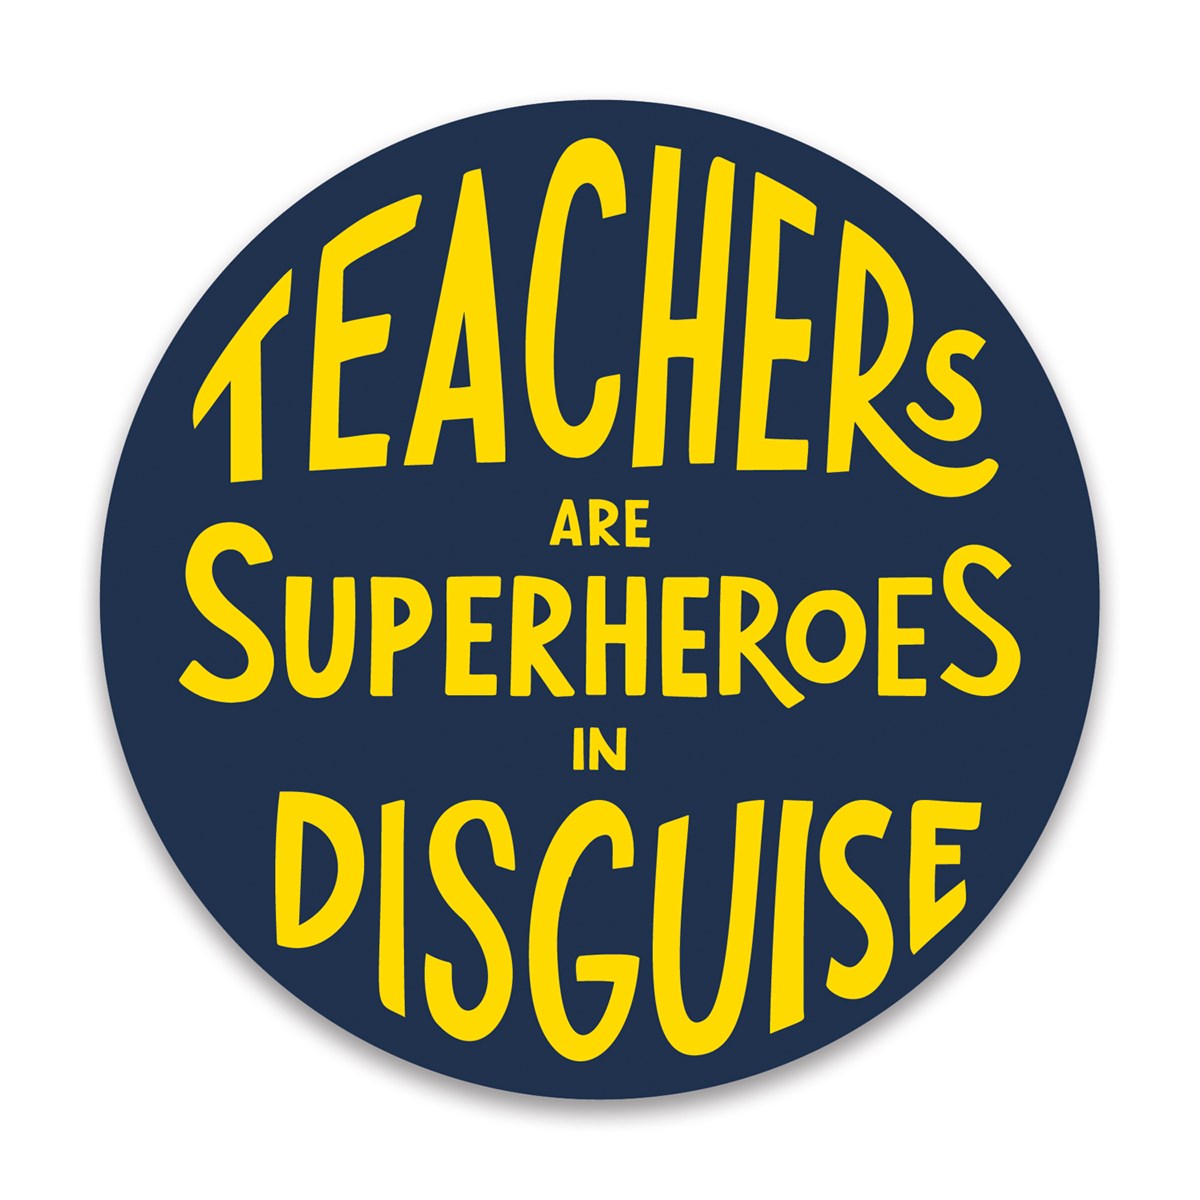 Car Magnet - Teachers Are Superheroes - 5" Diameter - Magnet